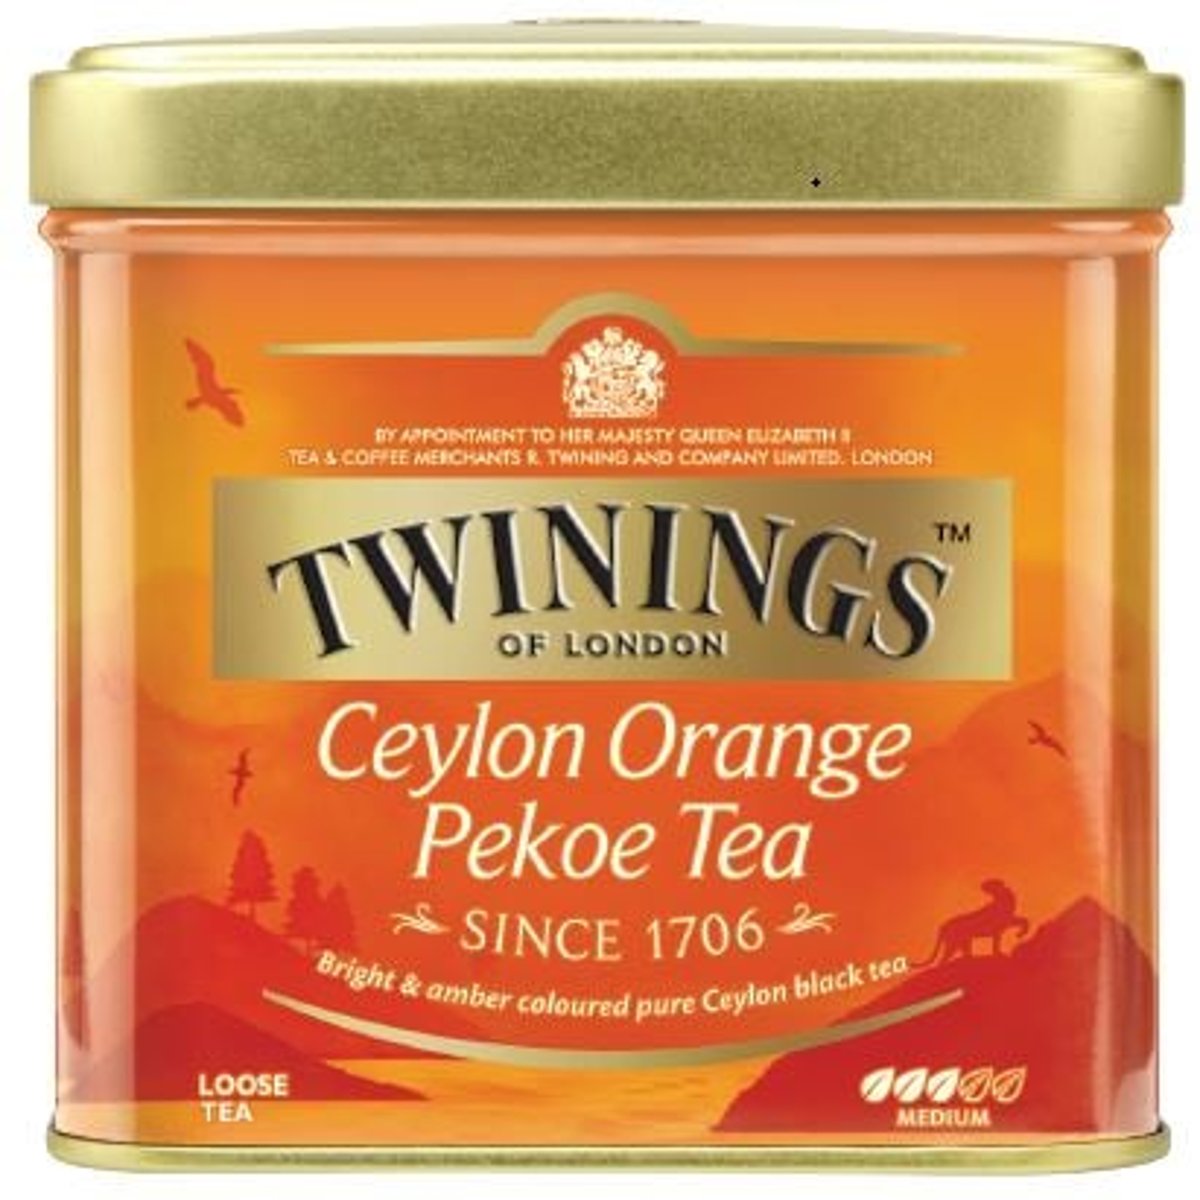 Twinings Ceylon Orange Pekoe